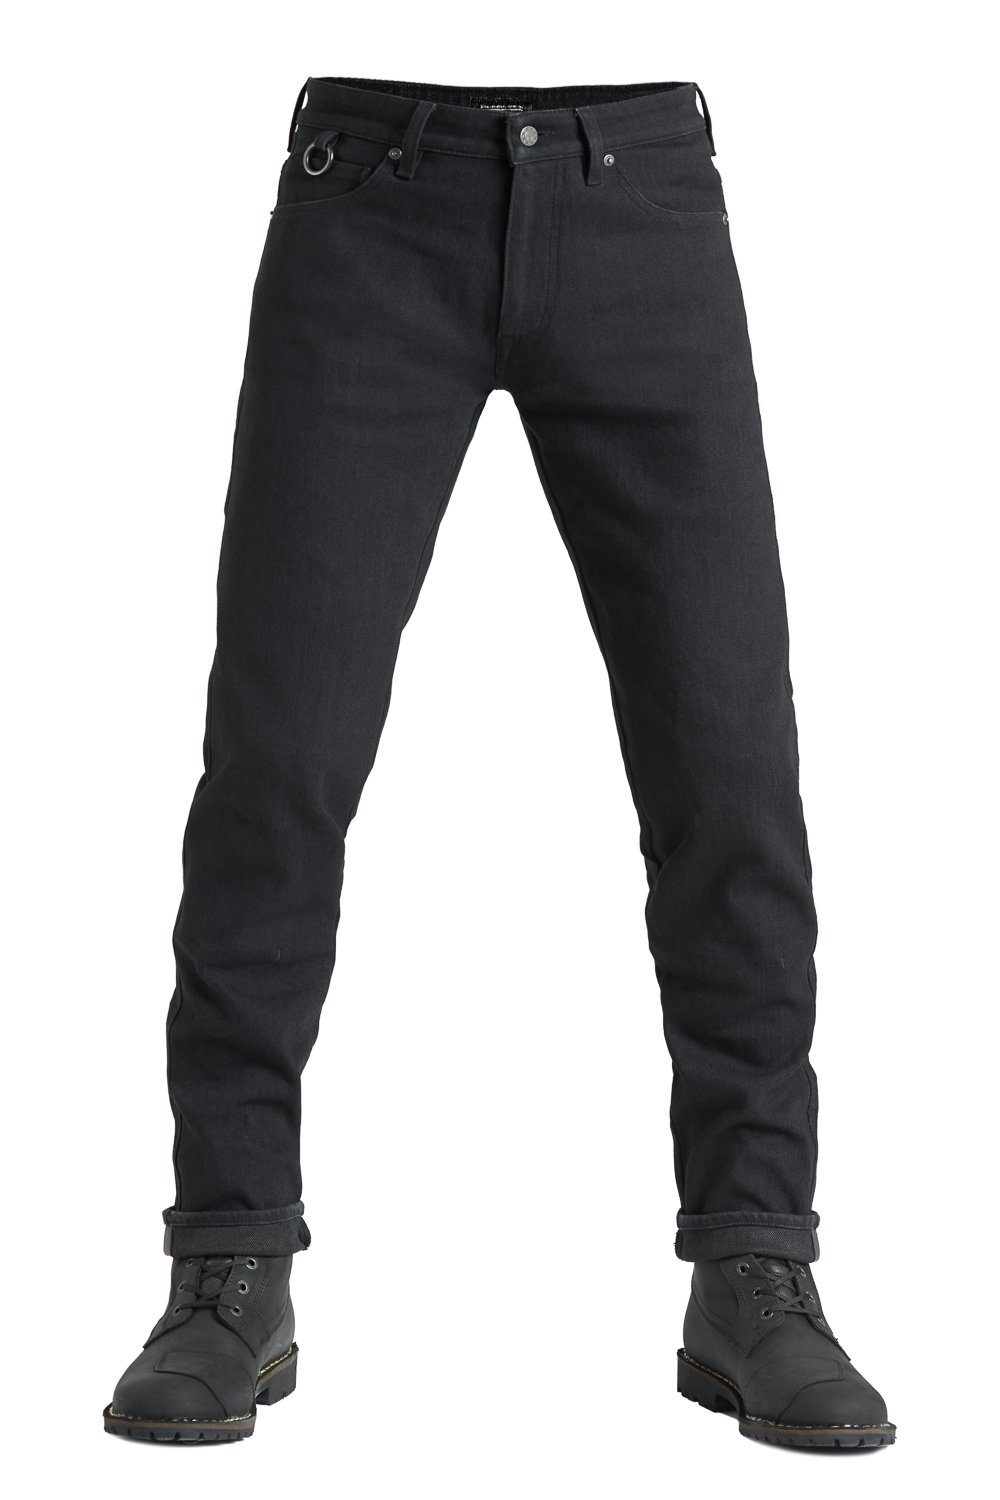 Image of Pando Moto Steel Noir 02 Slim Fit Dyneema® Pantalon Taille W34/L34